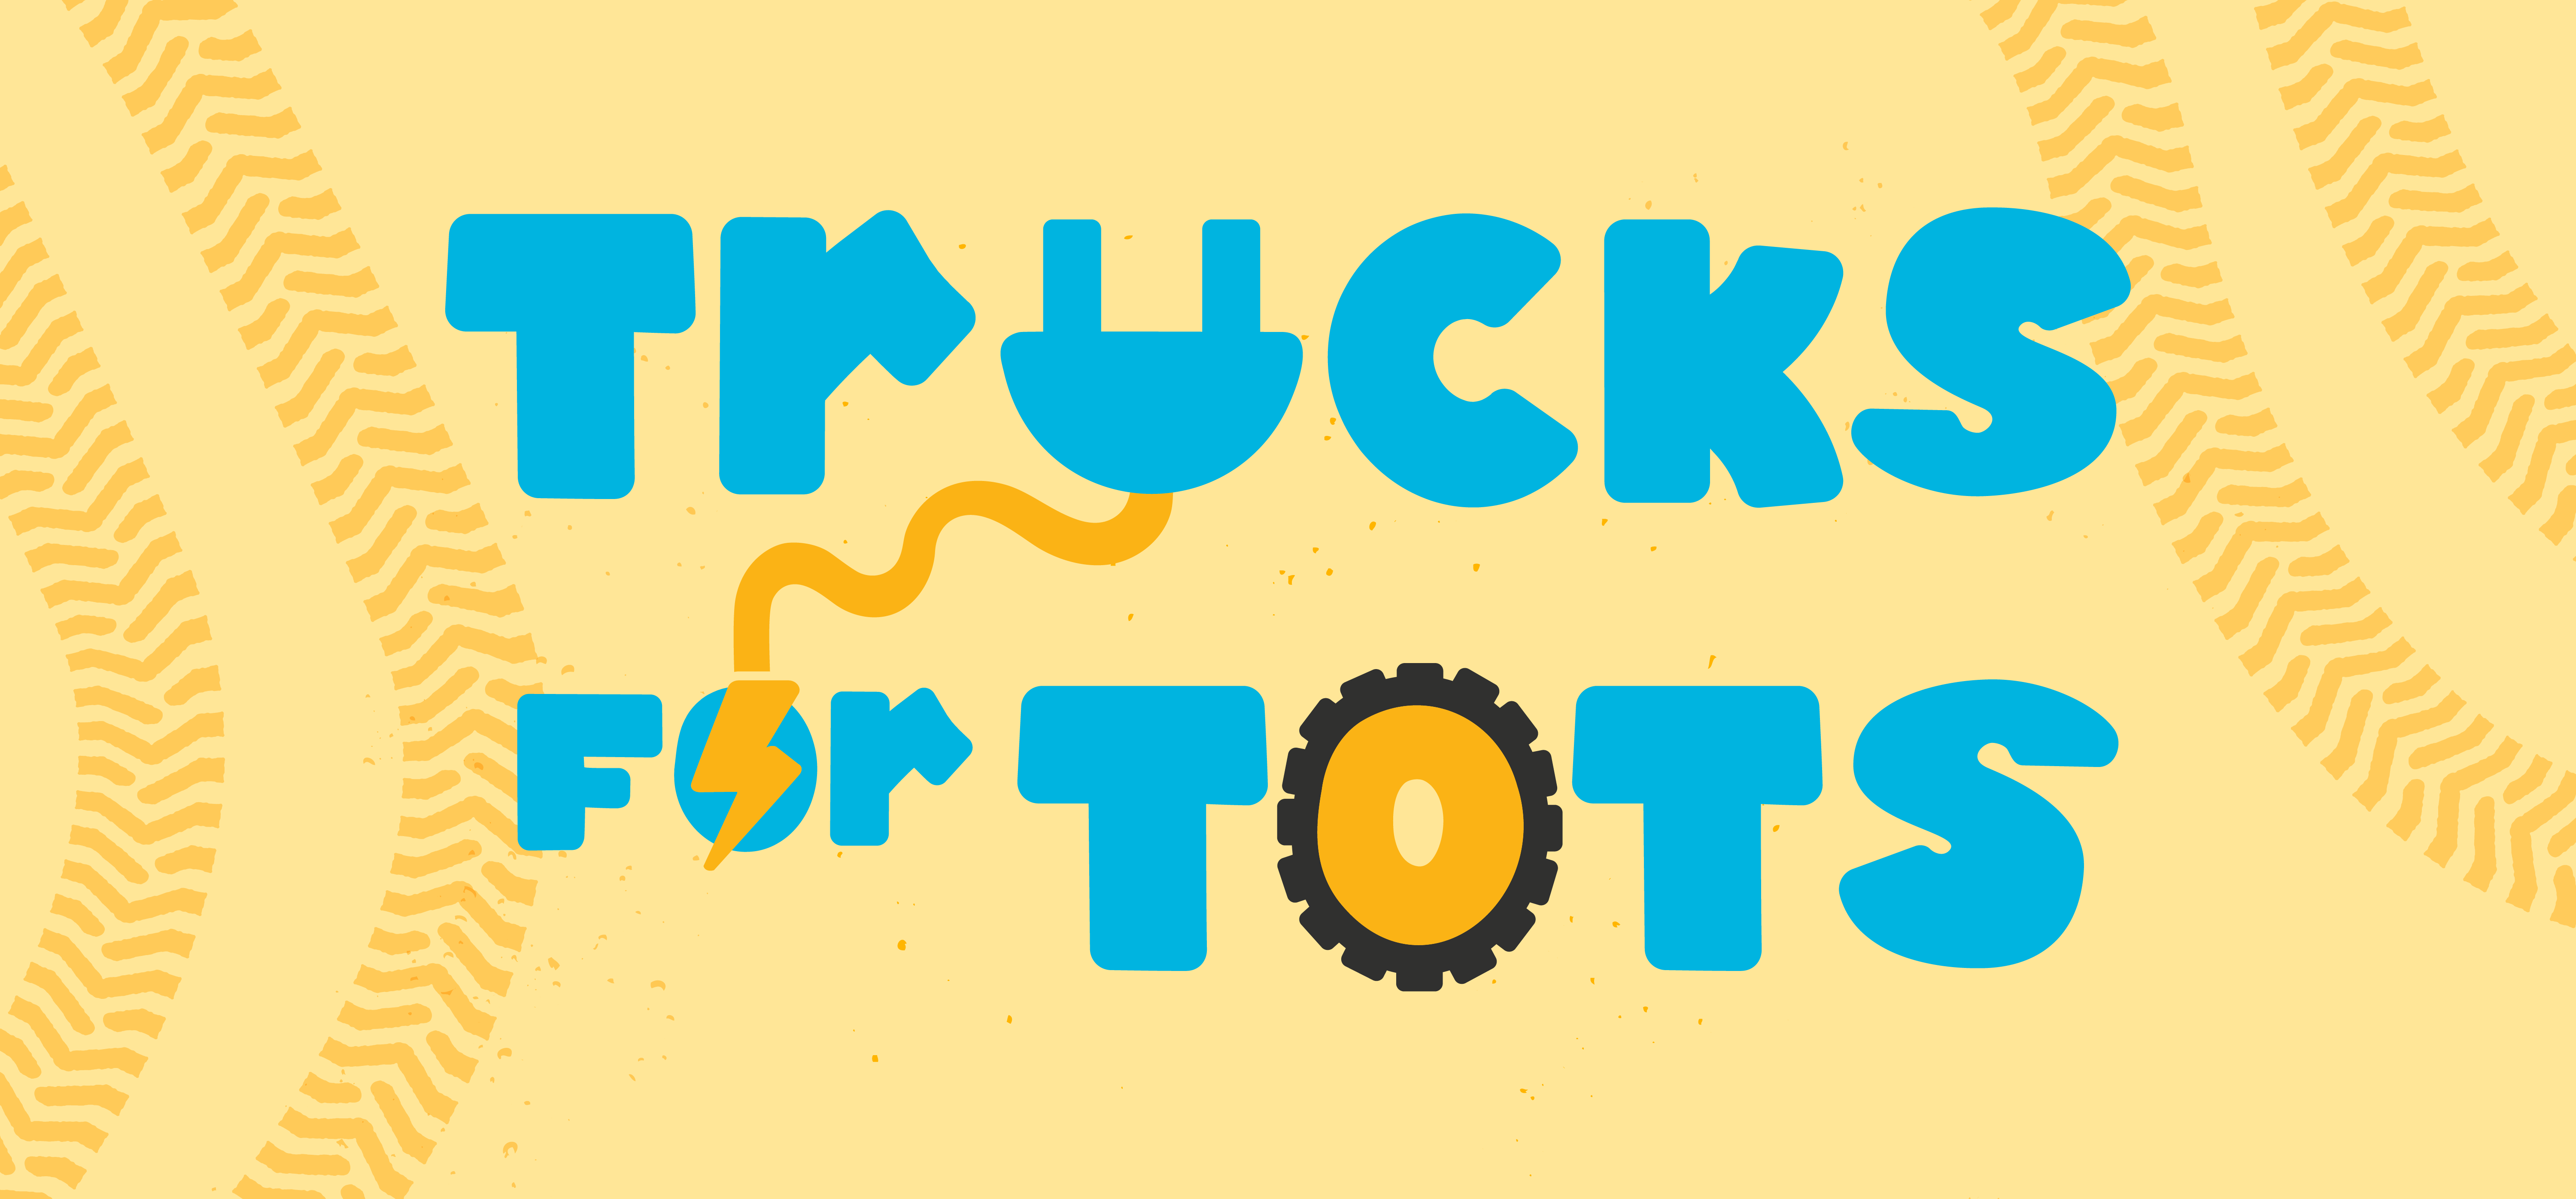 trucks for tots